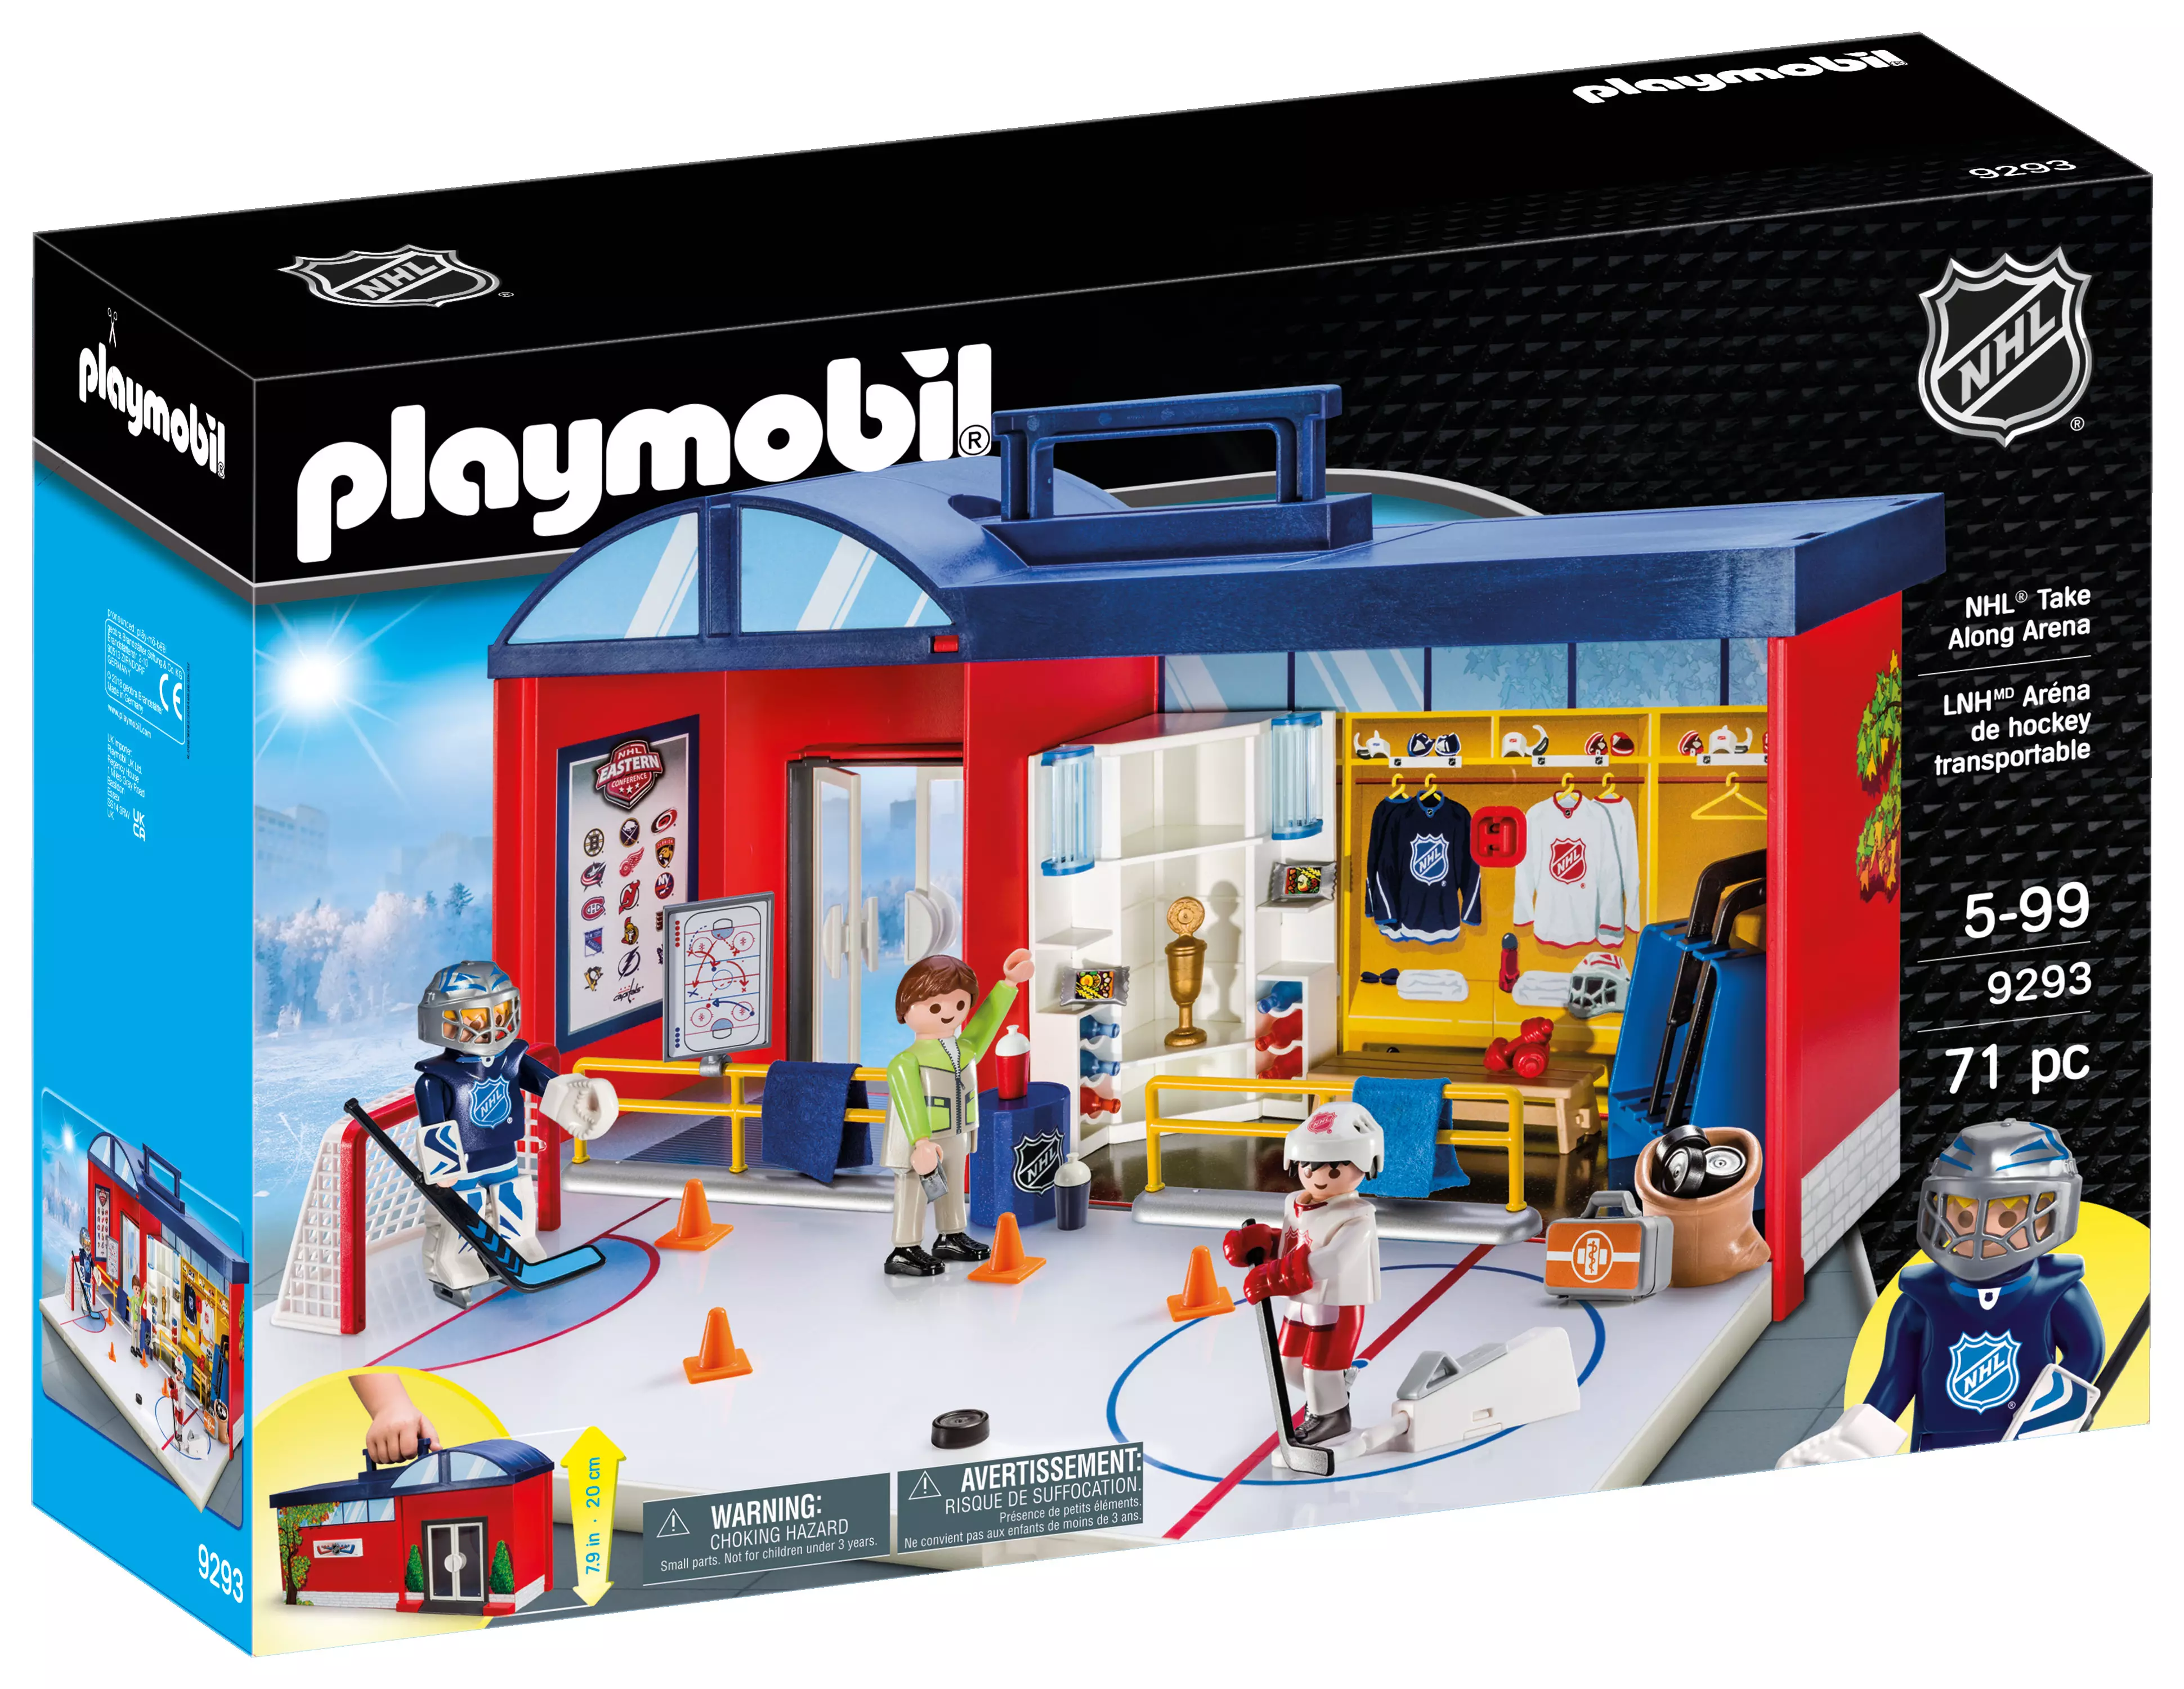 Playmobil Nhl Take Along Arena 9293